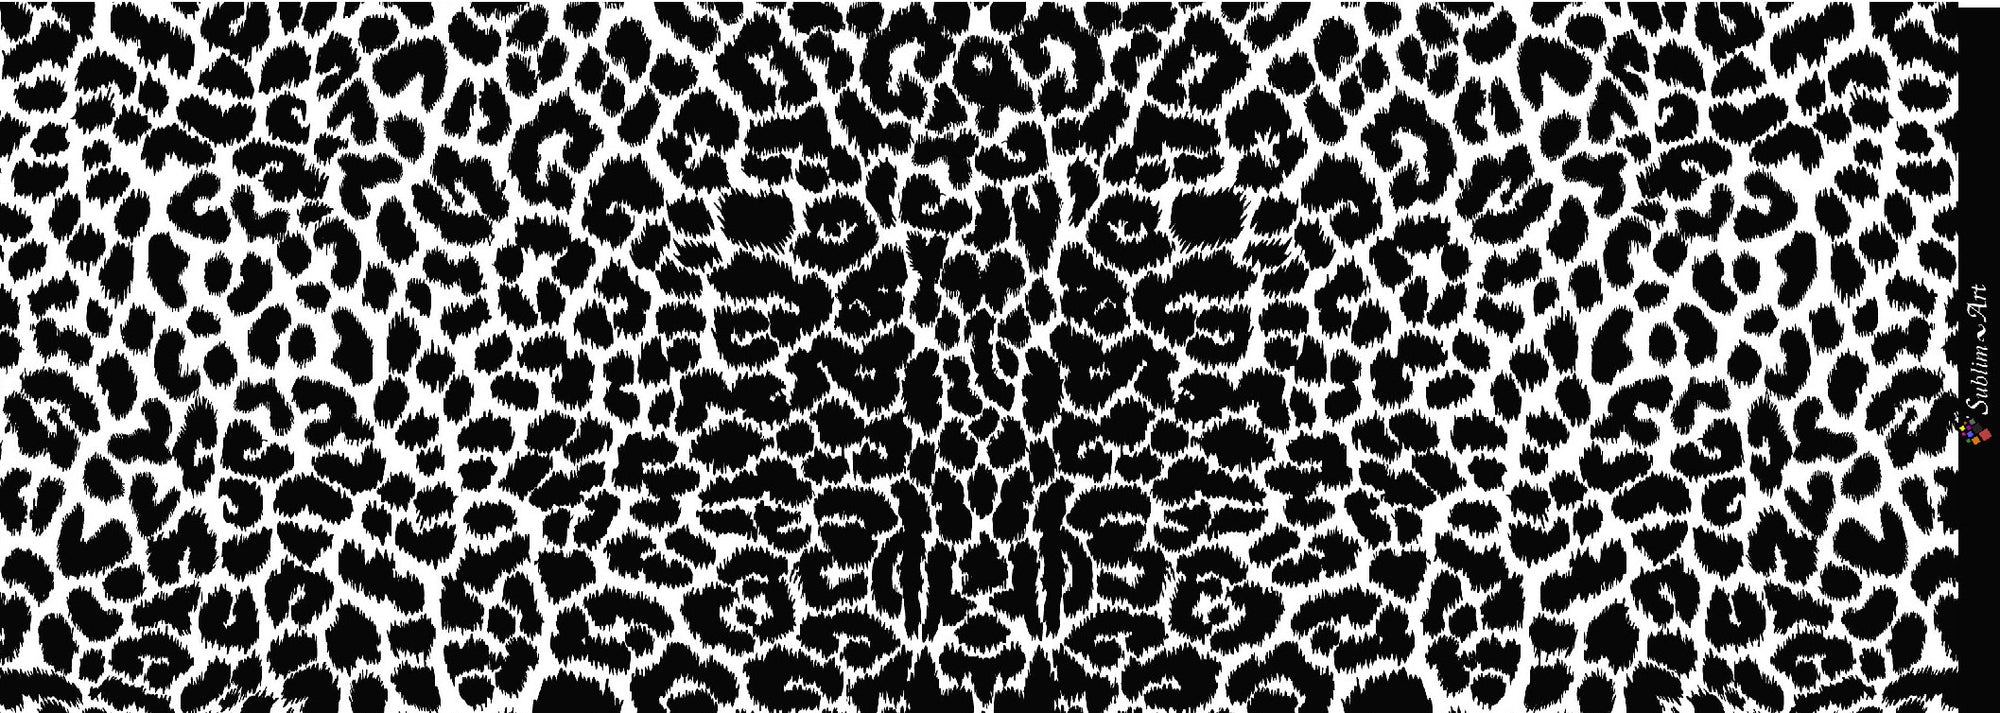 SUBLIMART: Animal Prints - Multi Use Tumbler - Black & White Leopard (Design #ANP1) - Artistica.com